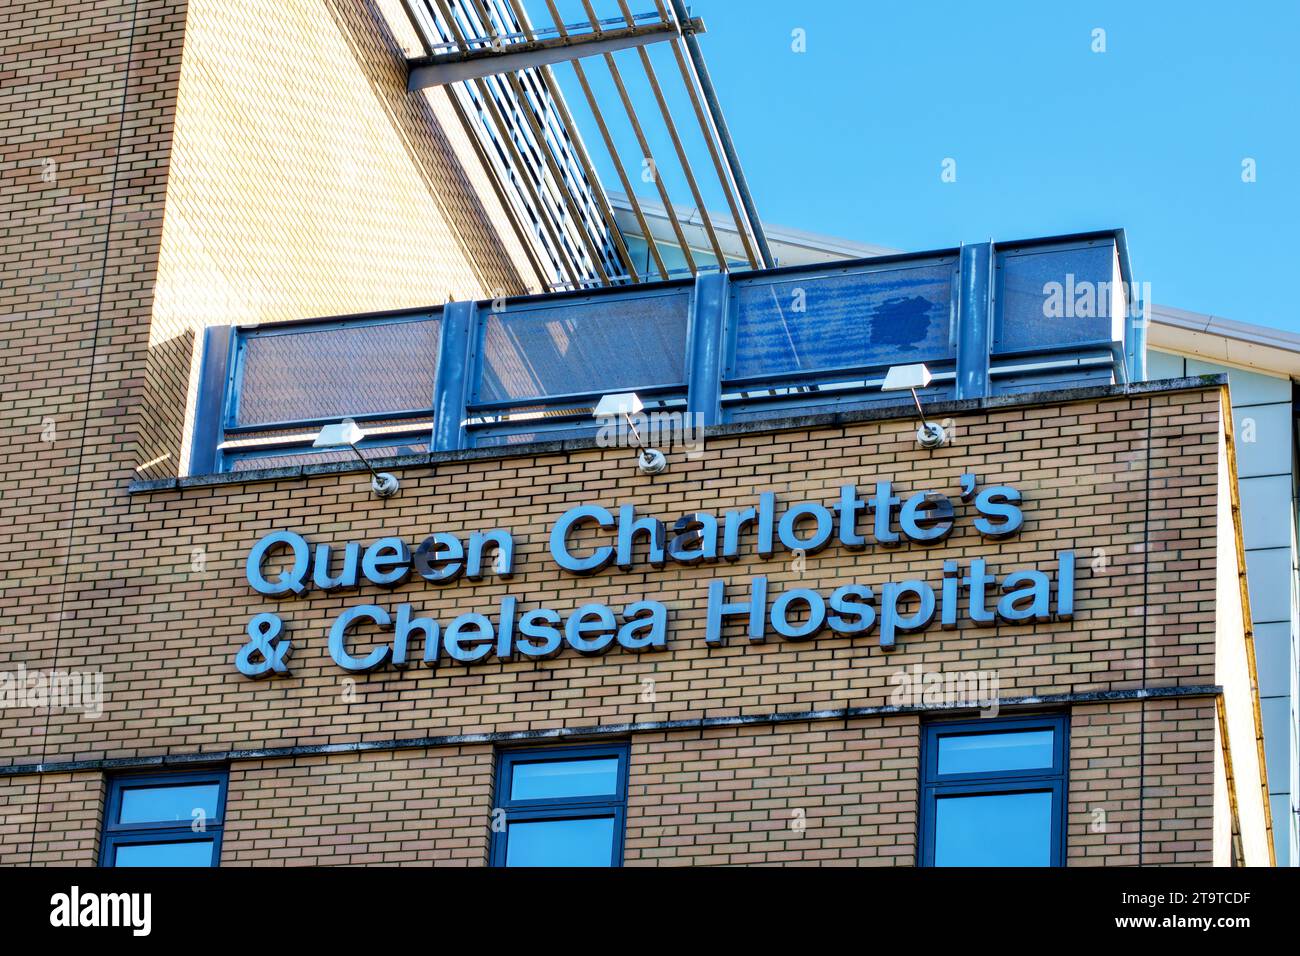 Queen Charlotte's & Chelsea Hospital, du Cane Road, Borough of Hammersmith & Fulham, London, England, Großbritannien Stockfoto